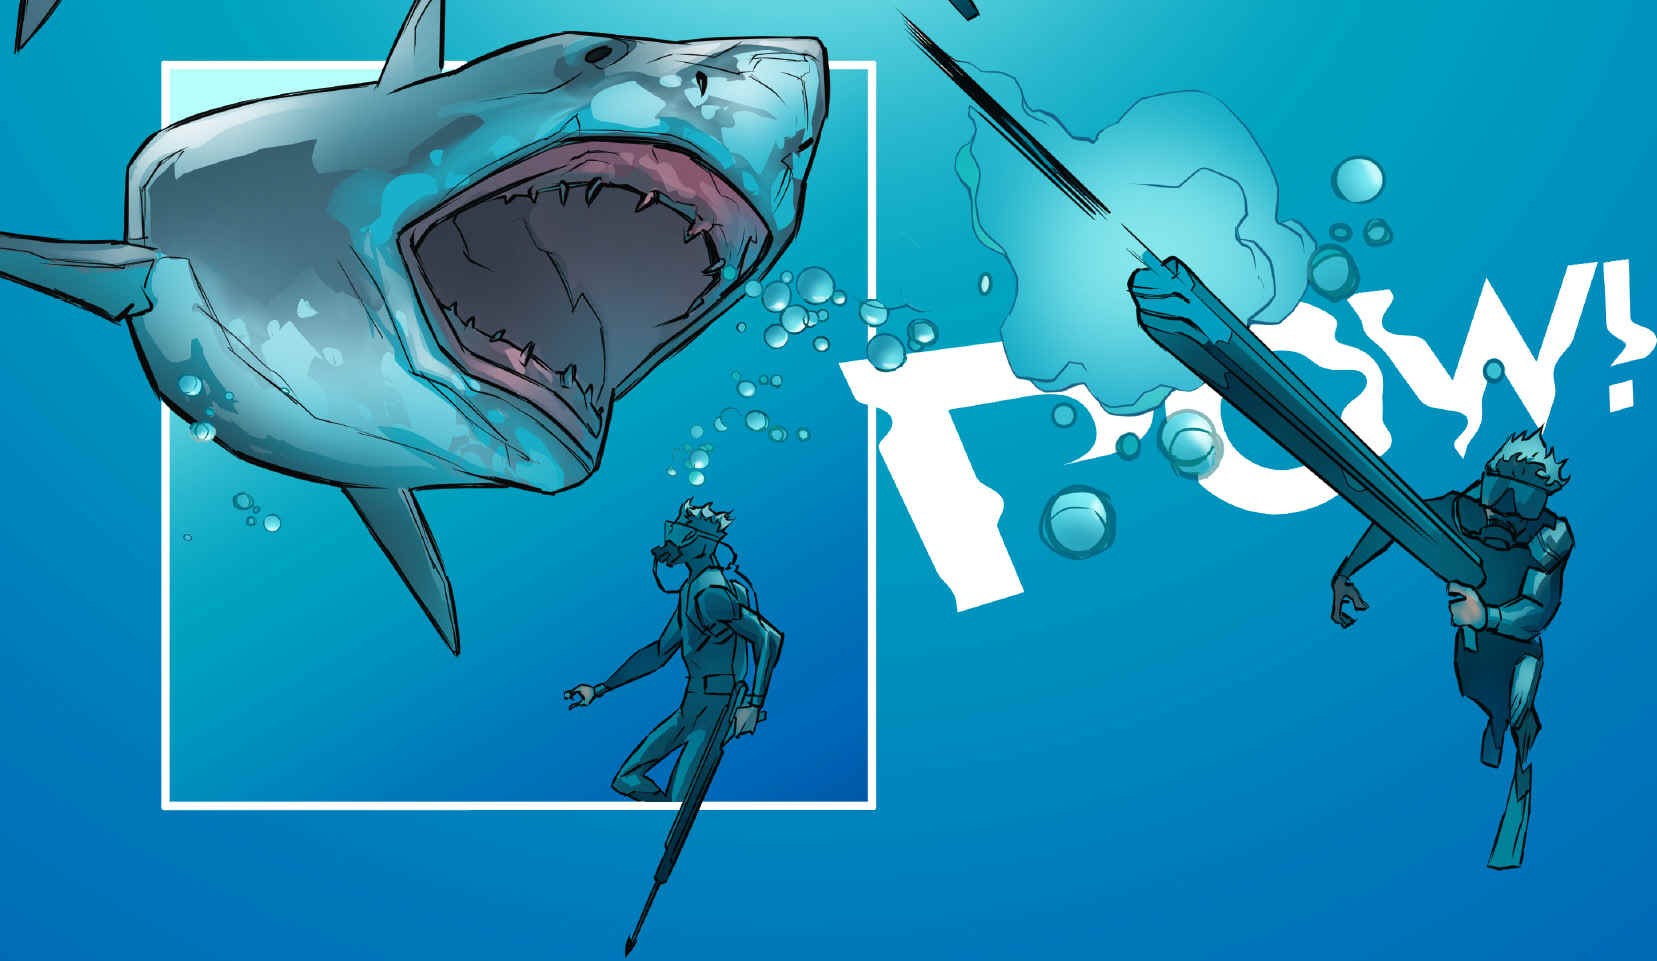 John Storm, ocean adventurer, sees off a hungry great white shark